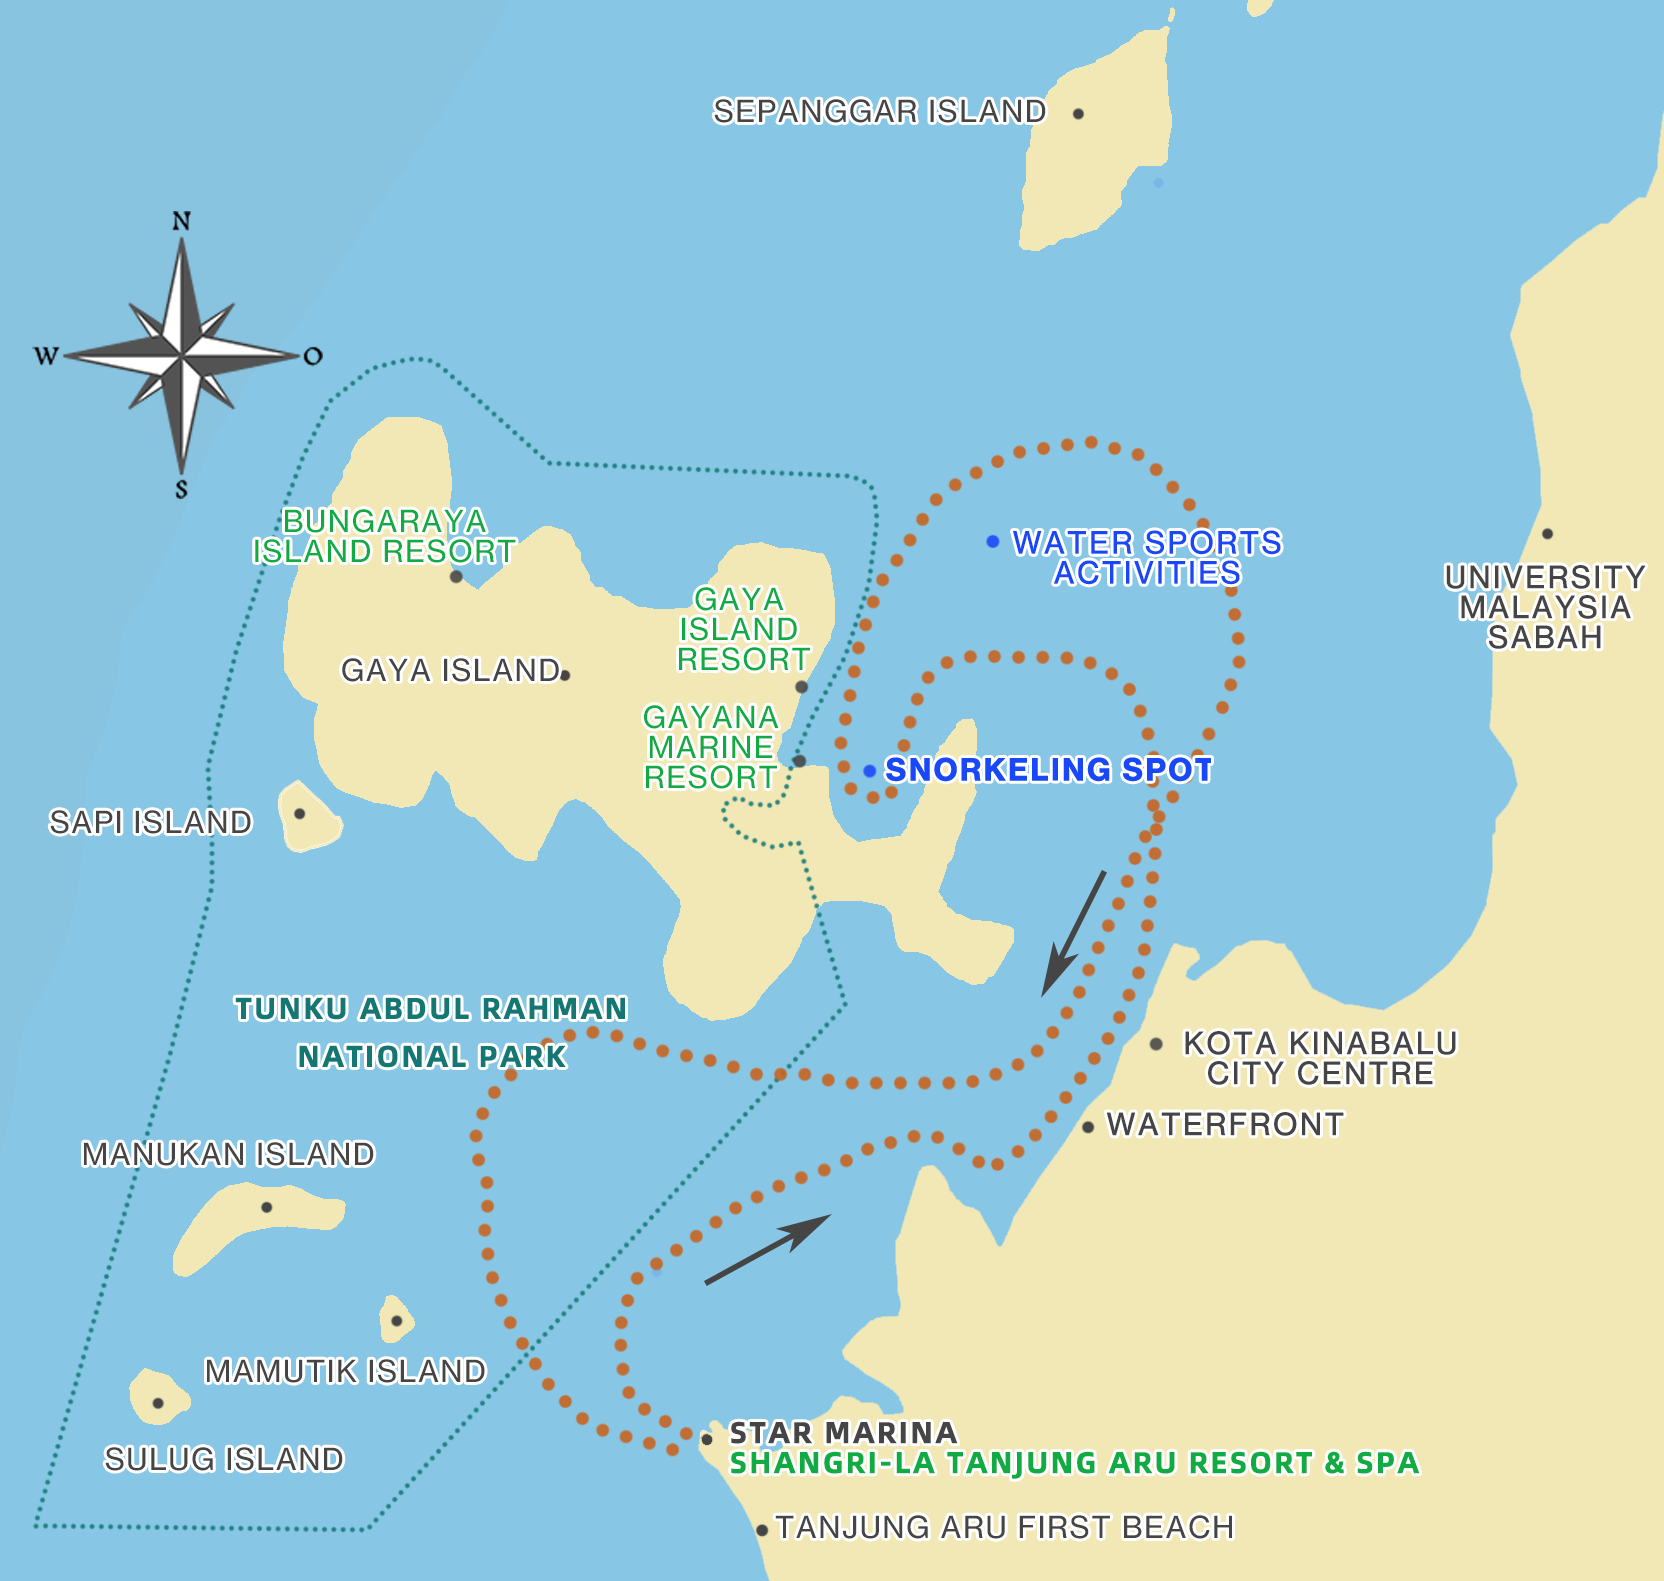 Sailing routes map of Party Boat Kota Kinabalu